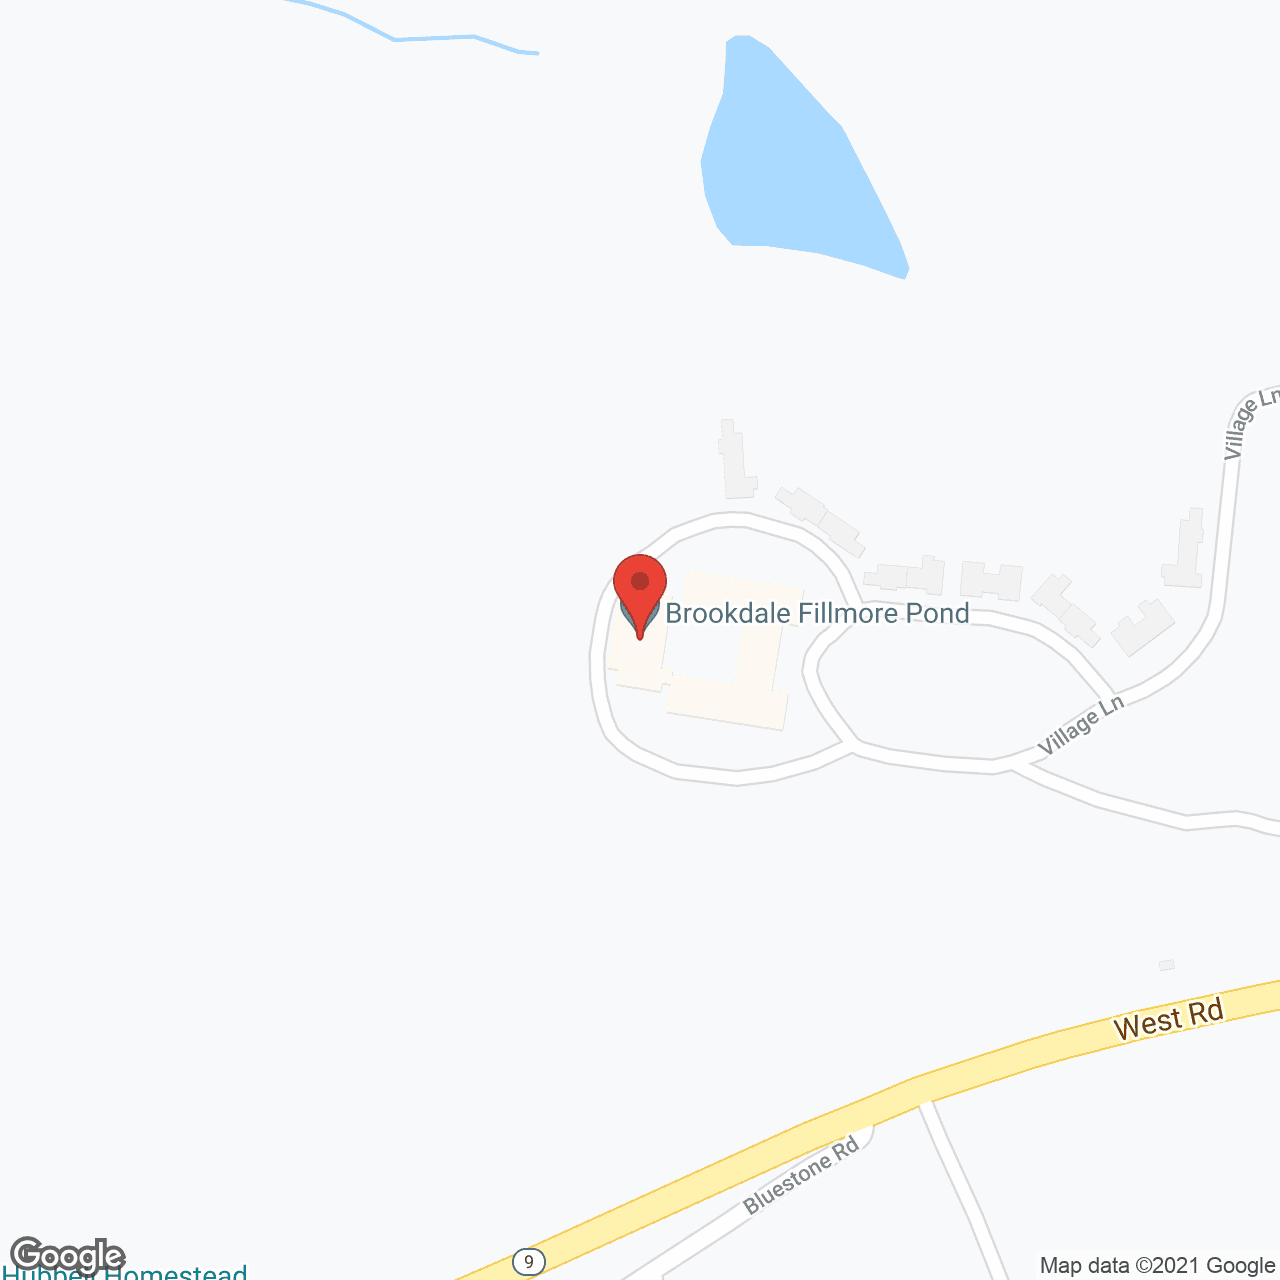 Brookdale Fillmore Pond in google map